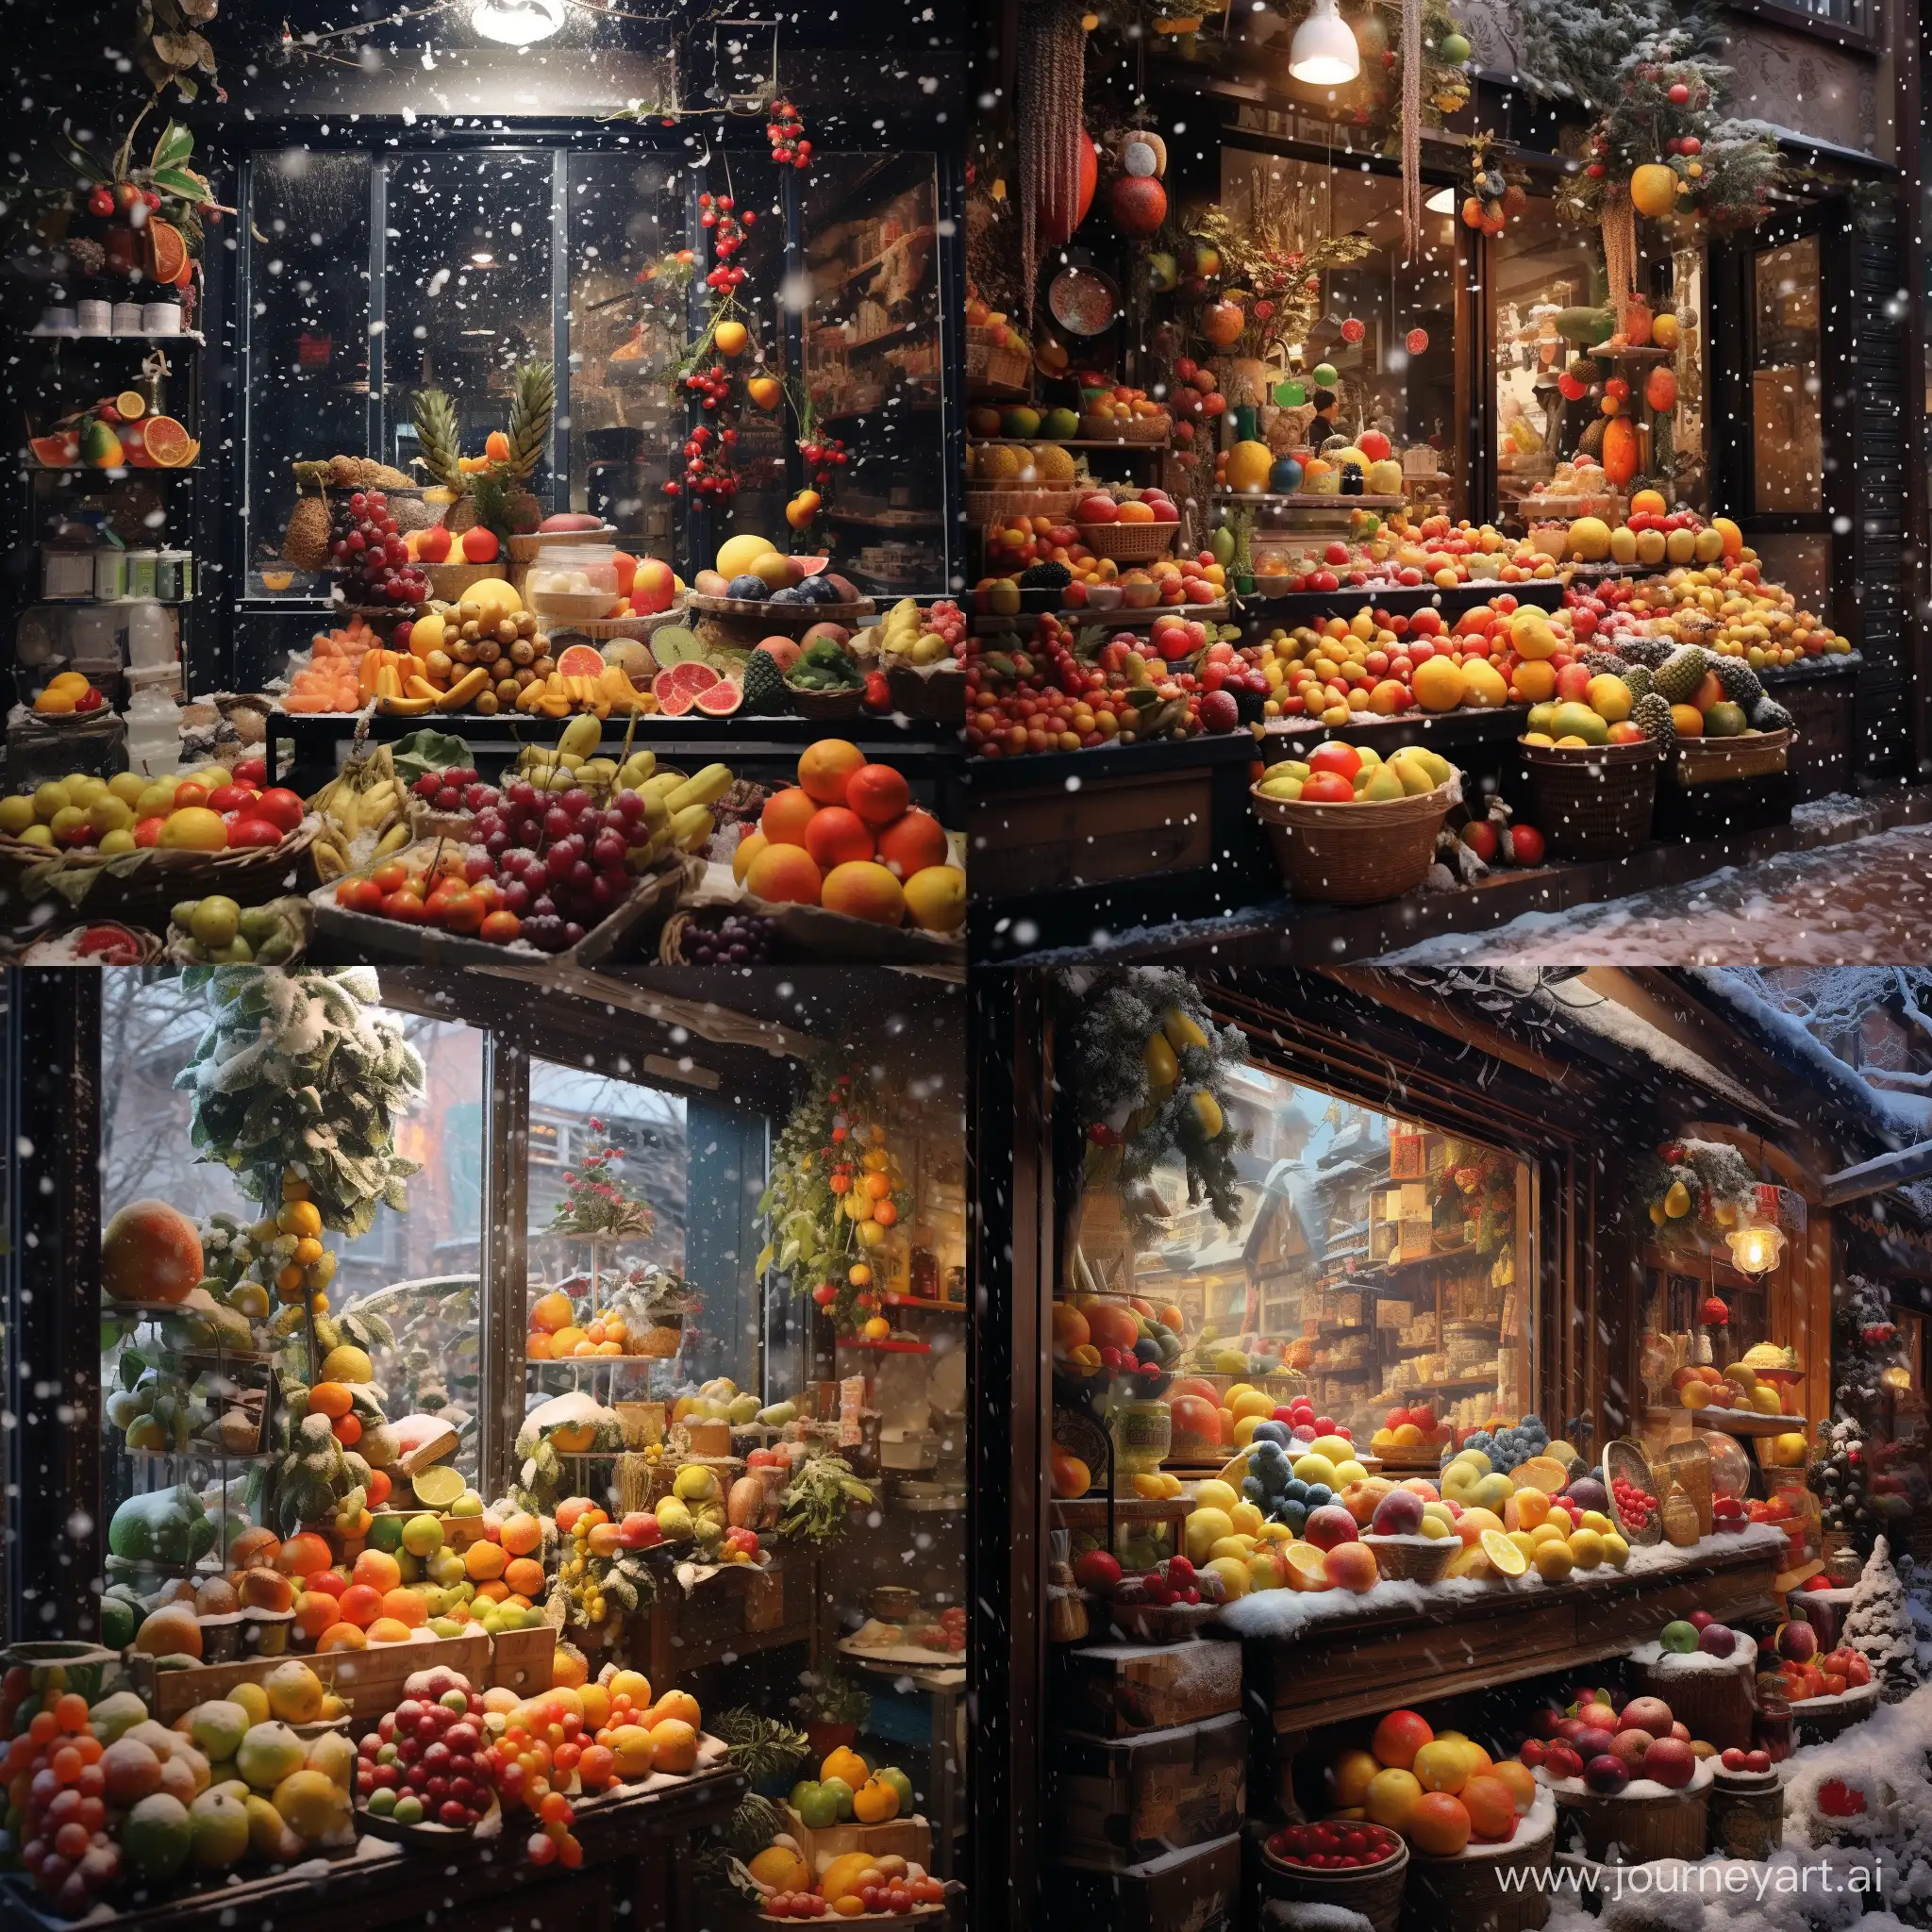 Snowy-New-Years-Eve-Fruit-Shop-Scene